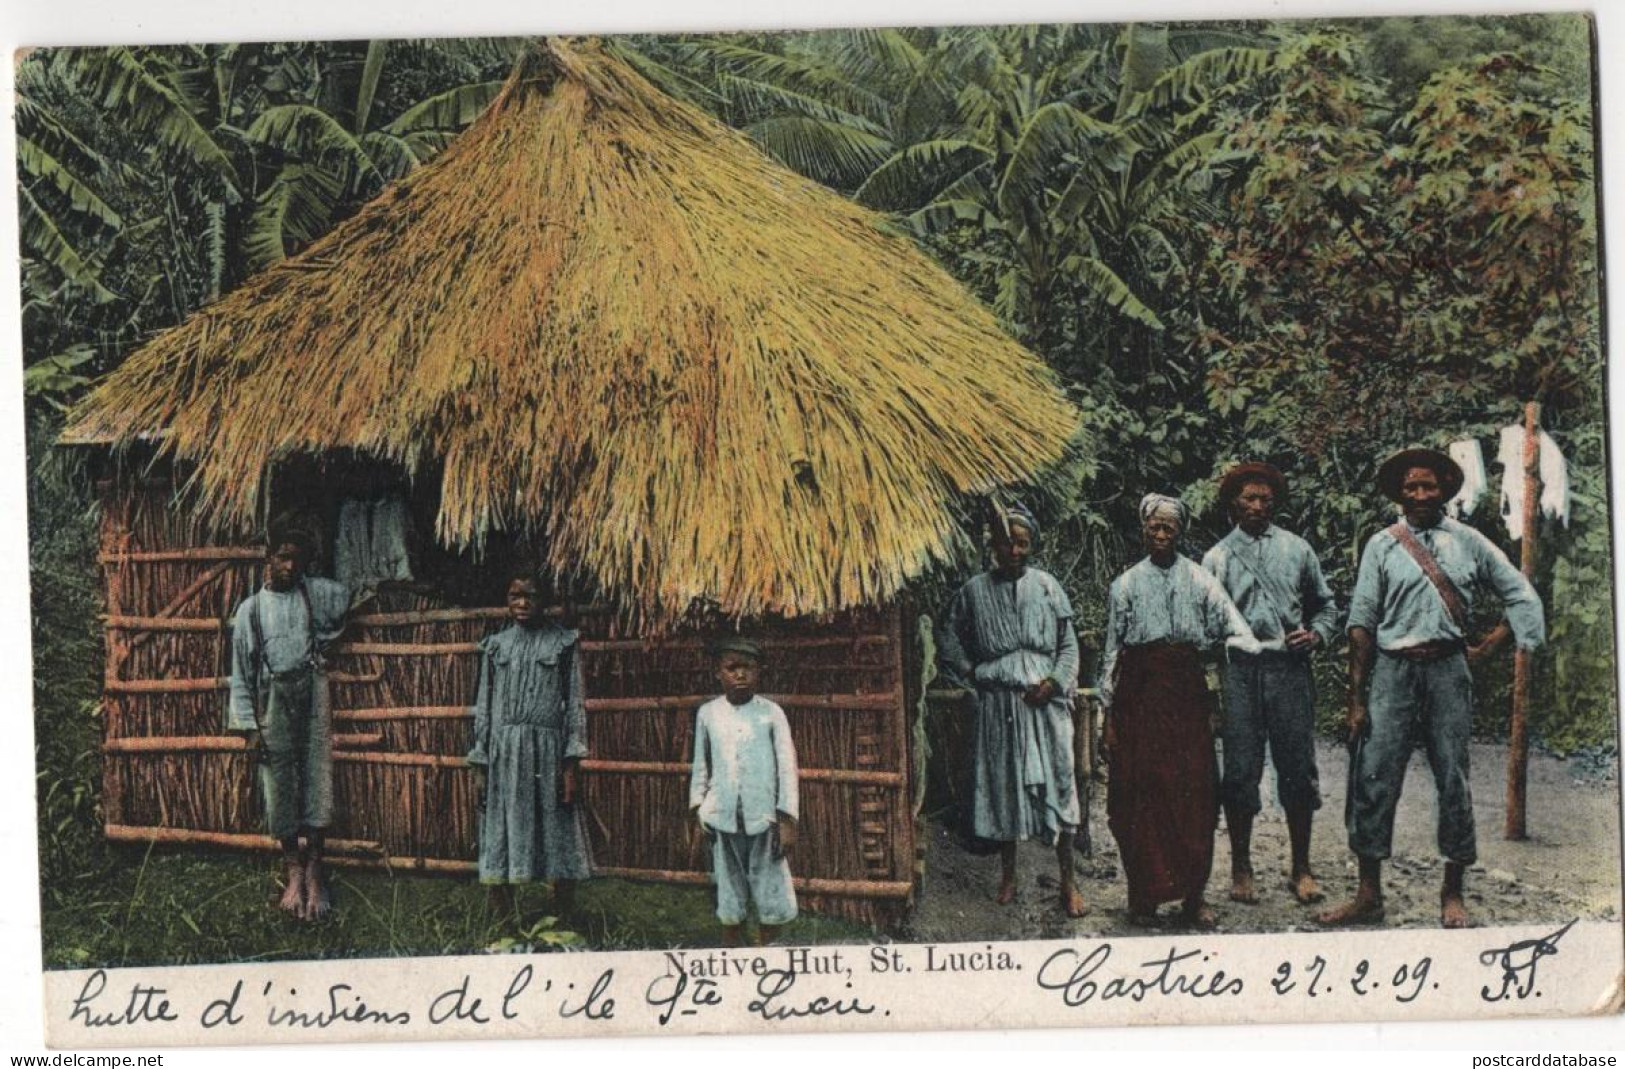 Native Huts - St. Lucia - St. Lucia